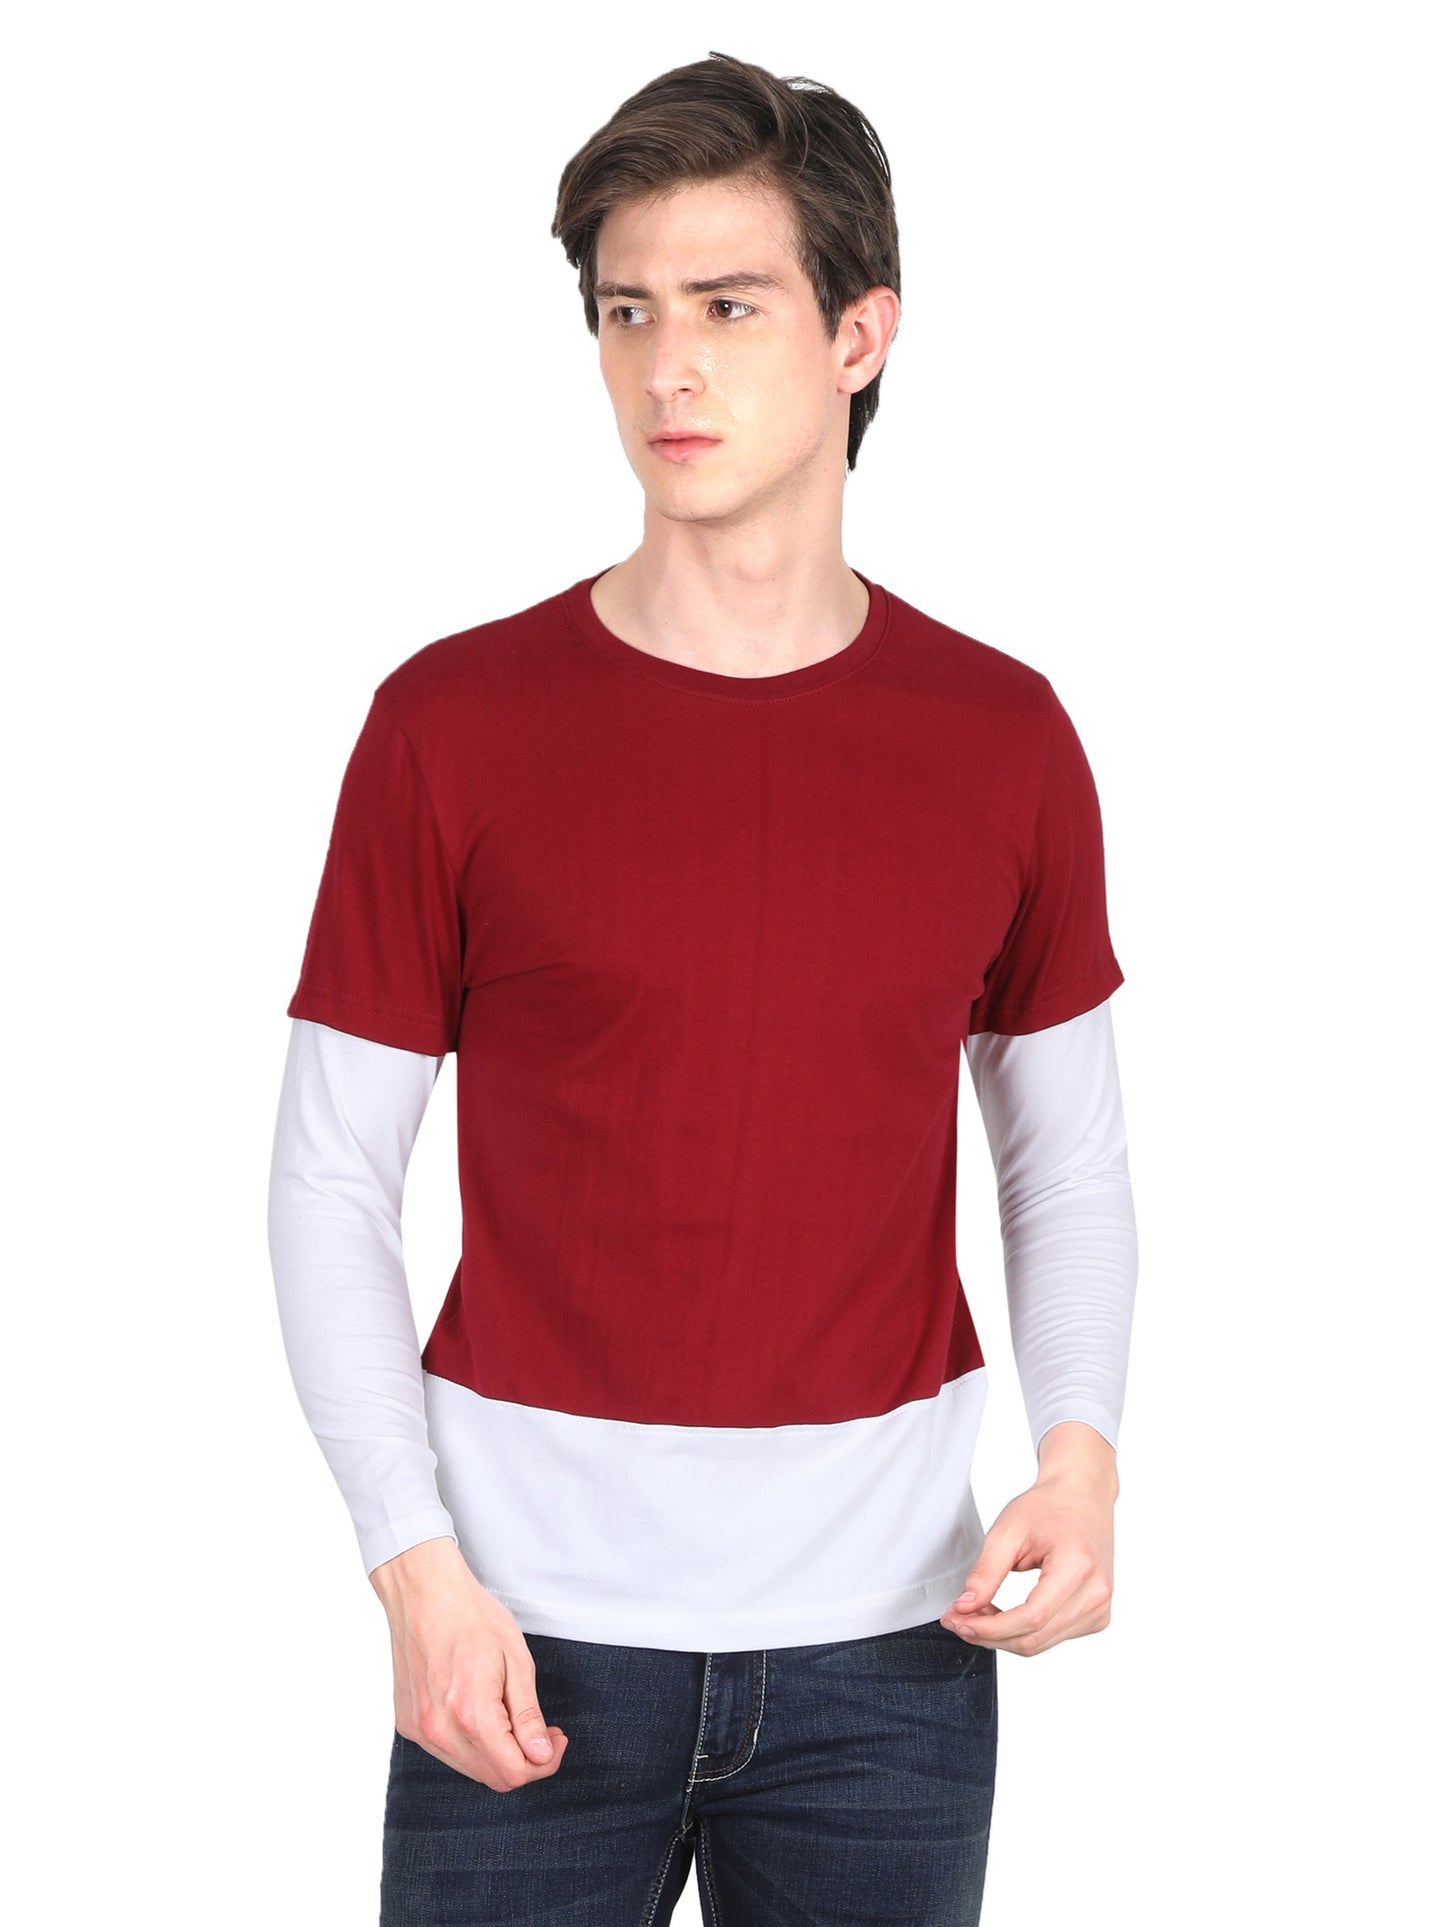 Men's Cotton Color Block Round Neck Full Sleeve T-Shirt